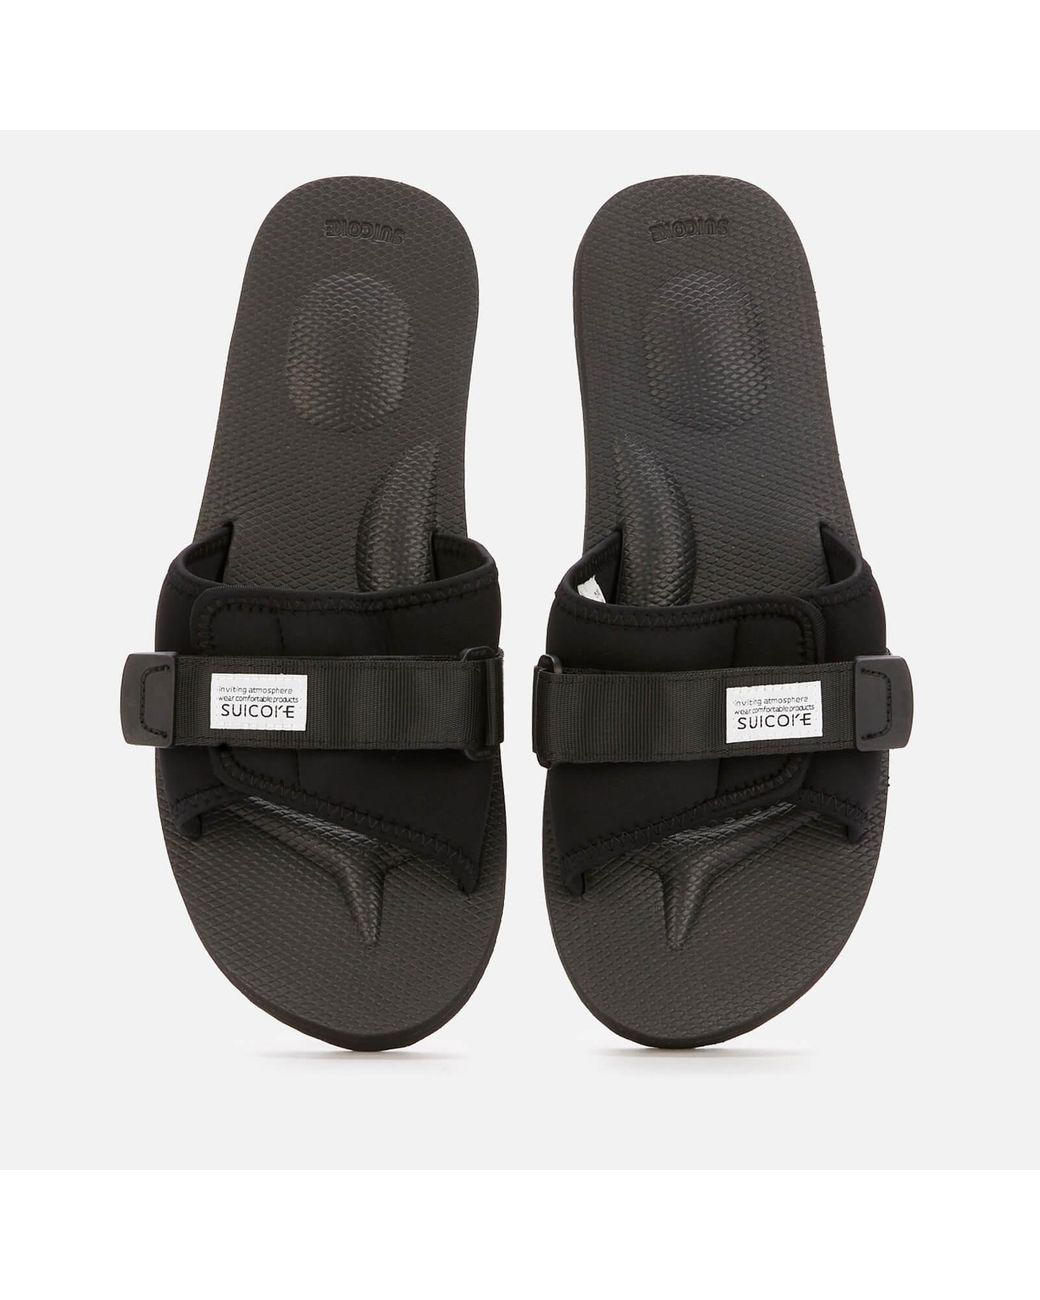 Suicoke Neoprene Padri Slide Sandals in Black | Lyst